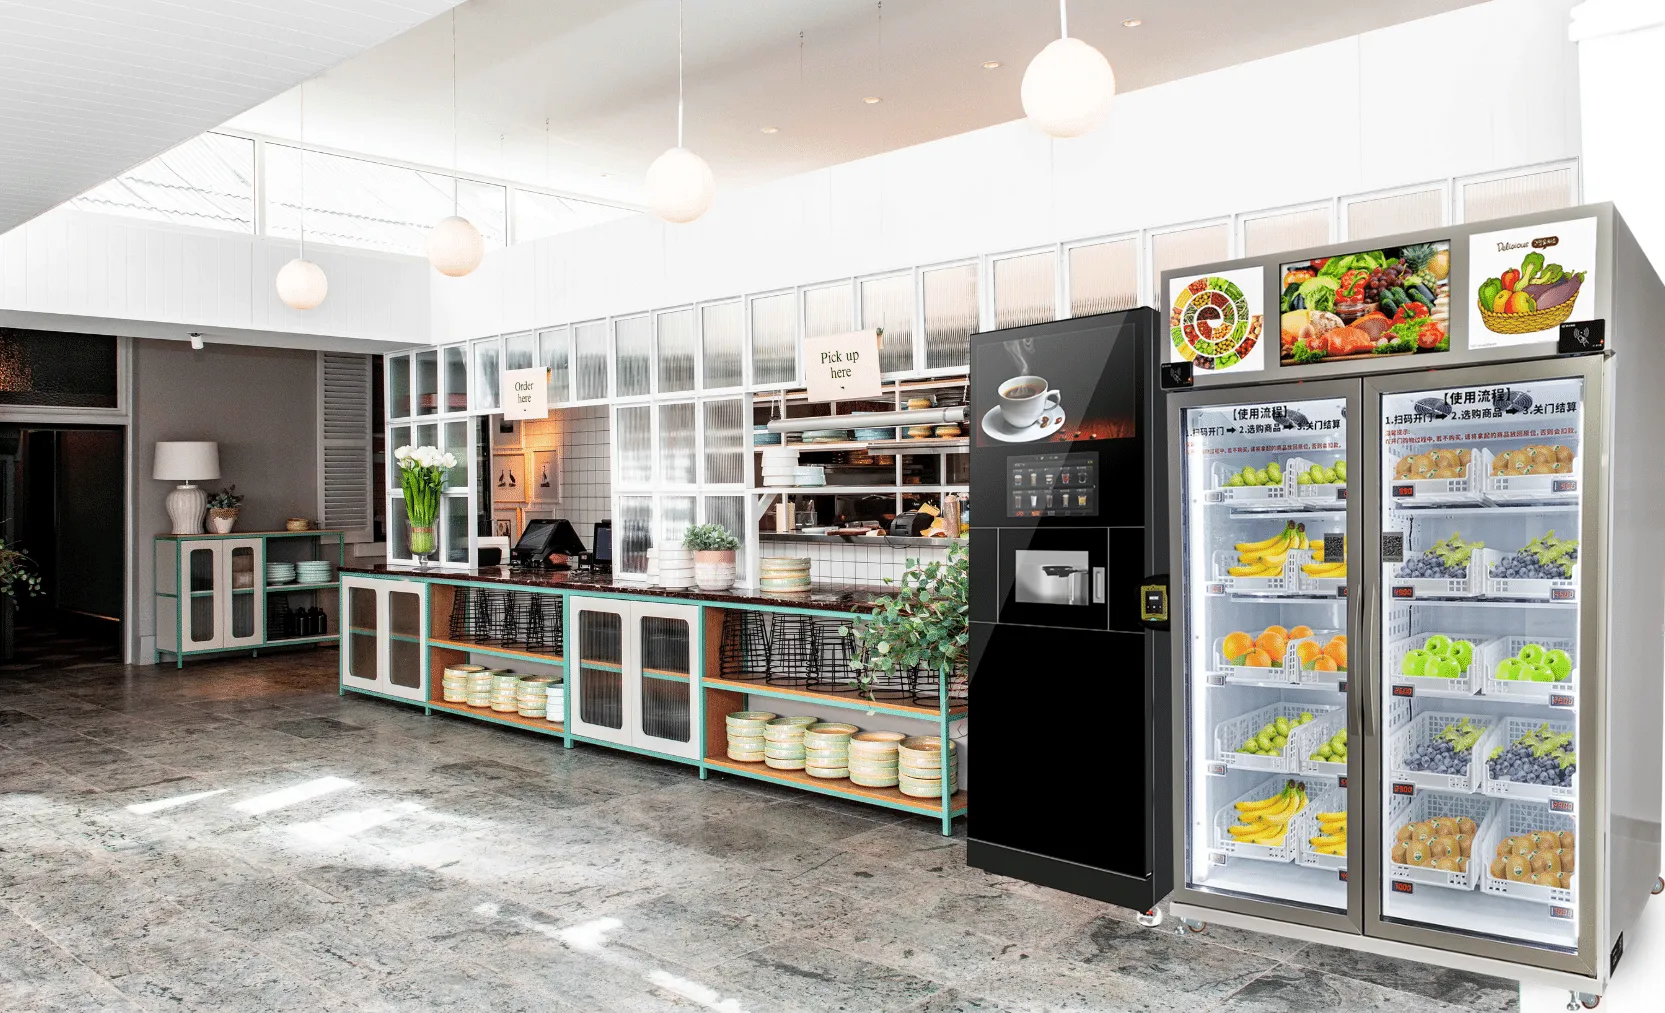 Micron vending machine smart fridge and coffee vending machine combination in workplace